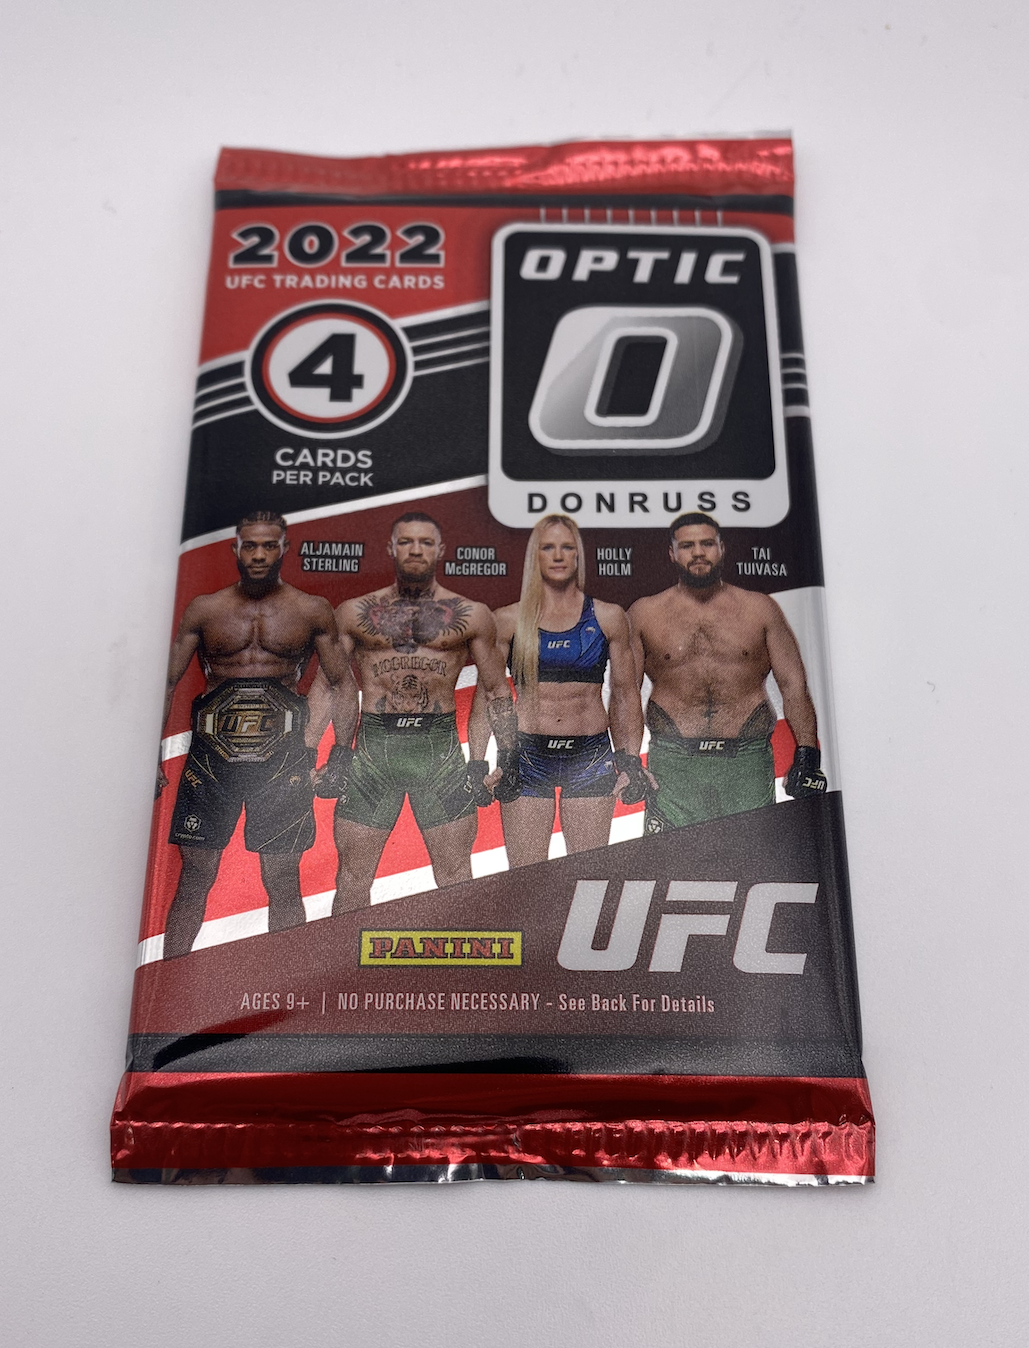 2022 Donruss Optic UFC Hobby Pack